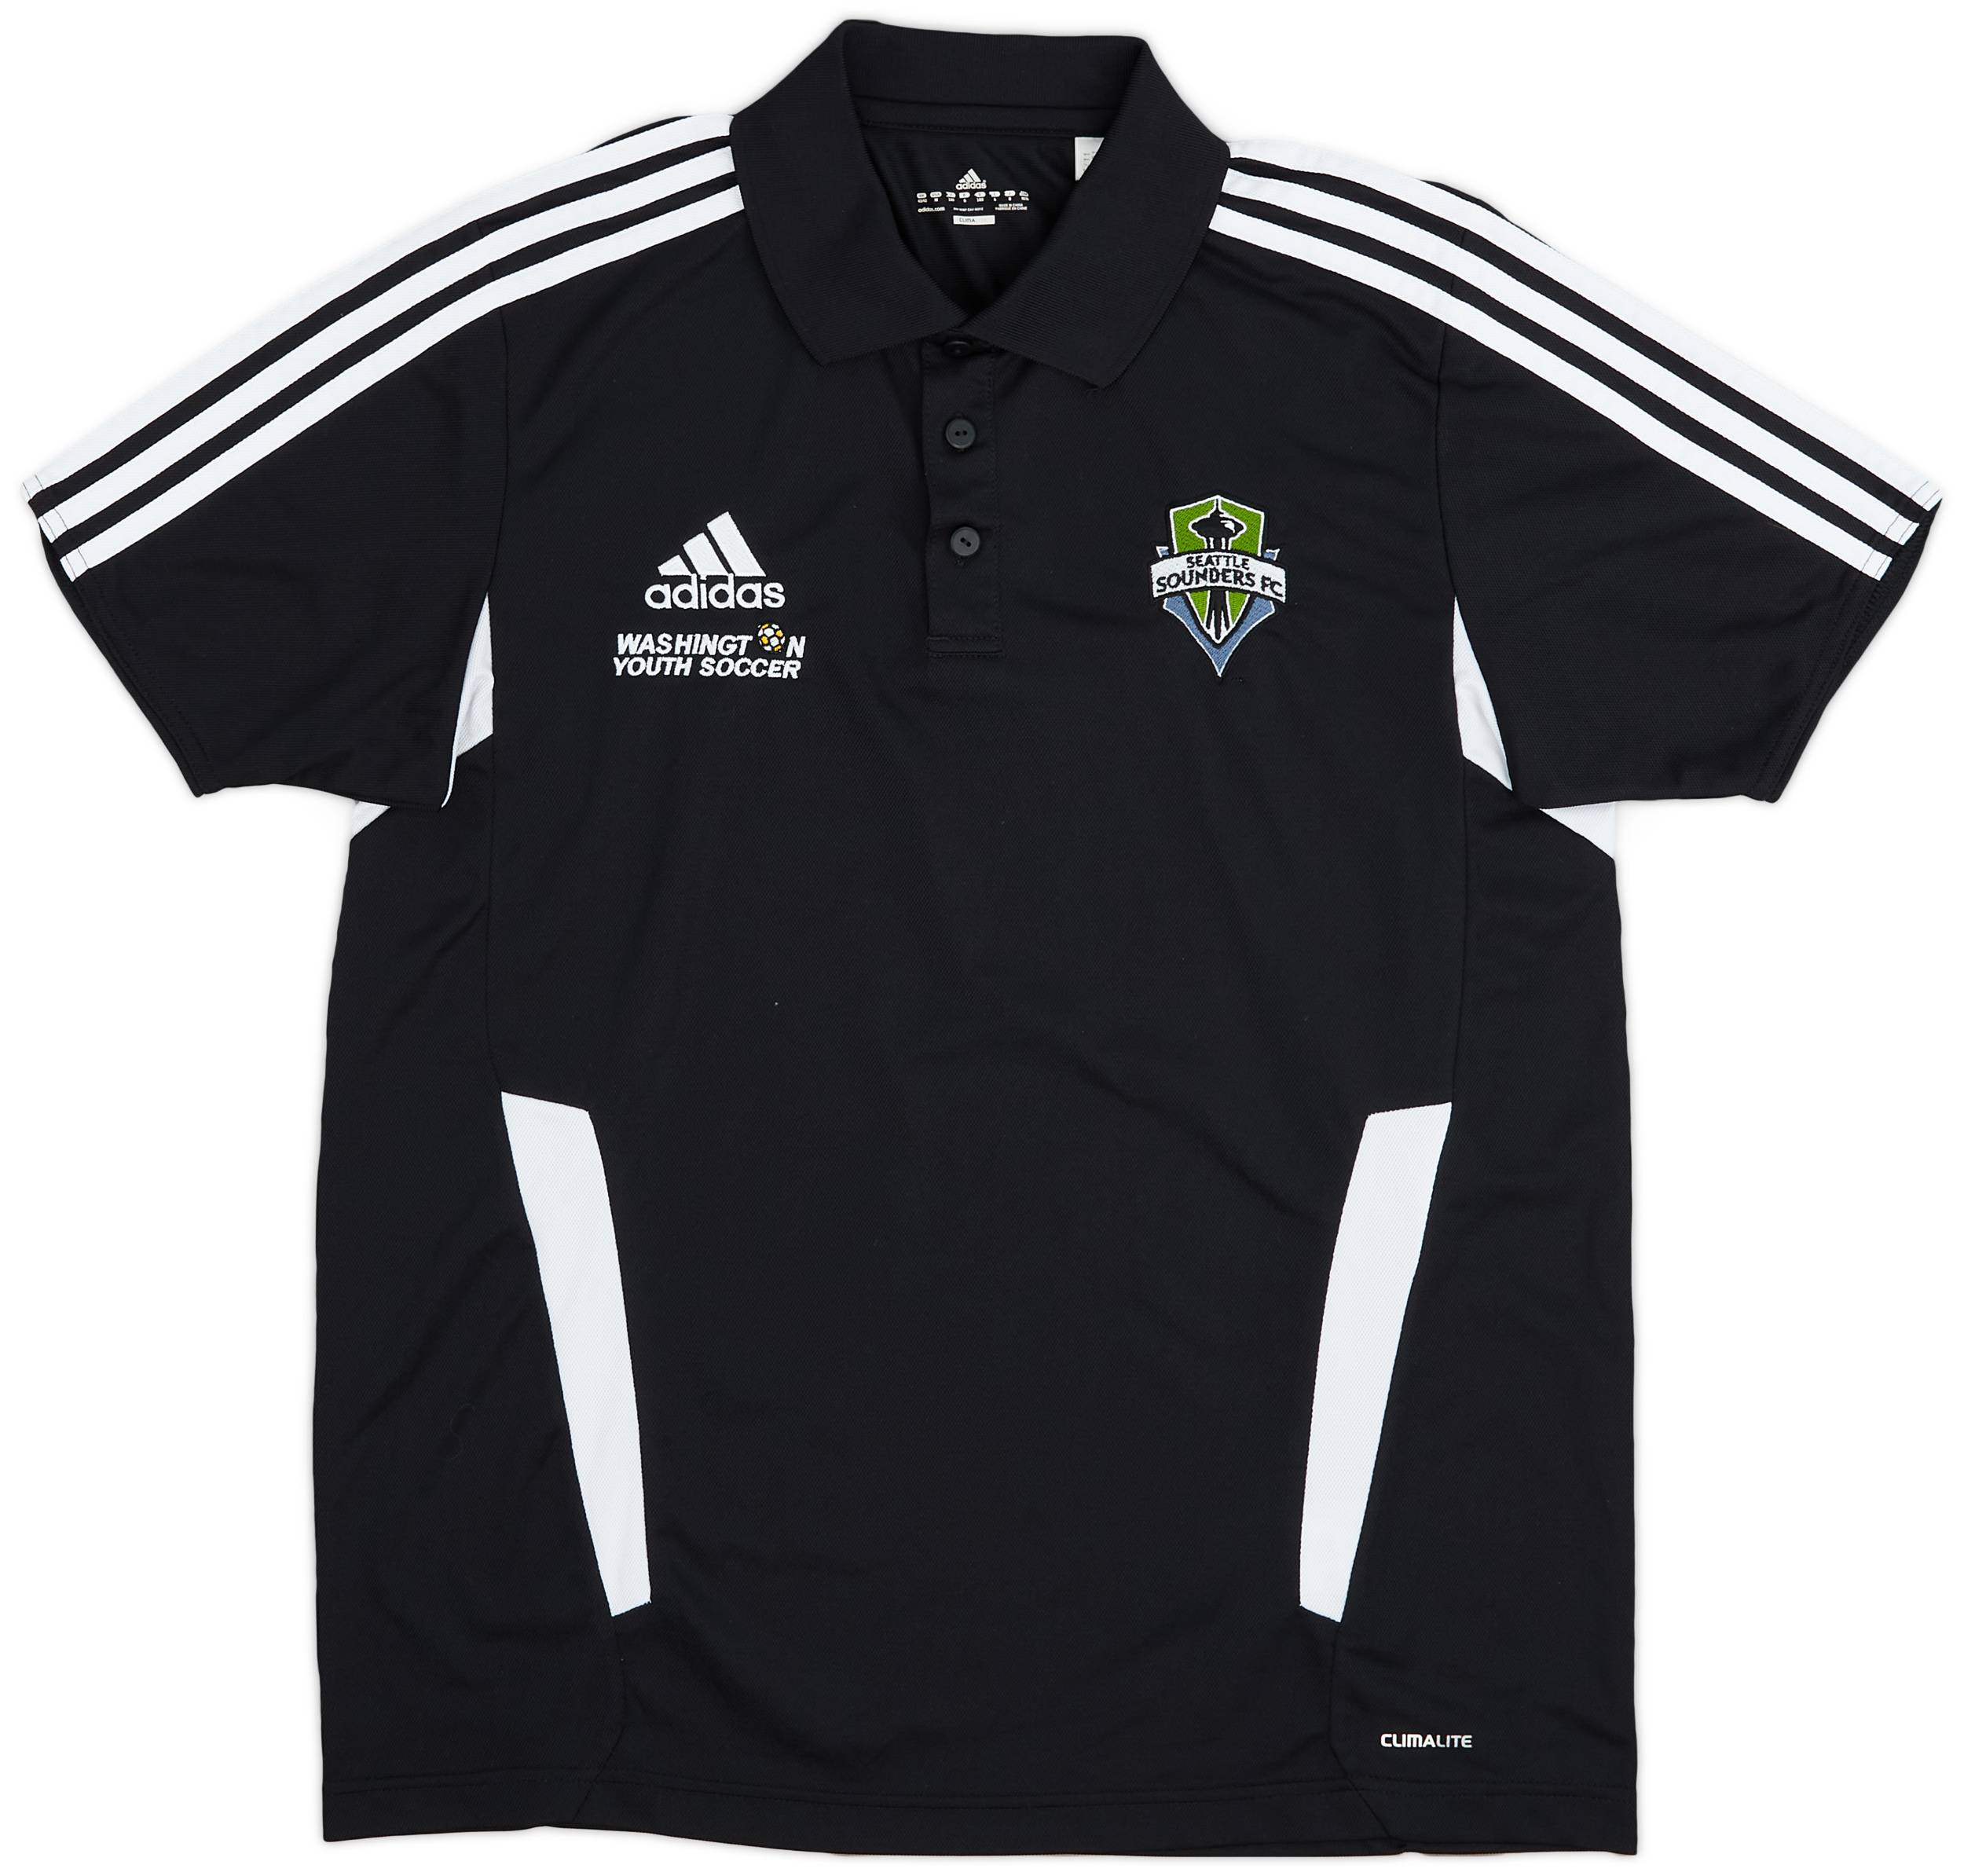 2011-12 Seattle Sounders adidas 'Washington Youth Soccer' Polo Shirt - 9/10 - (M/L)